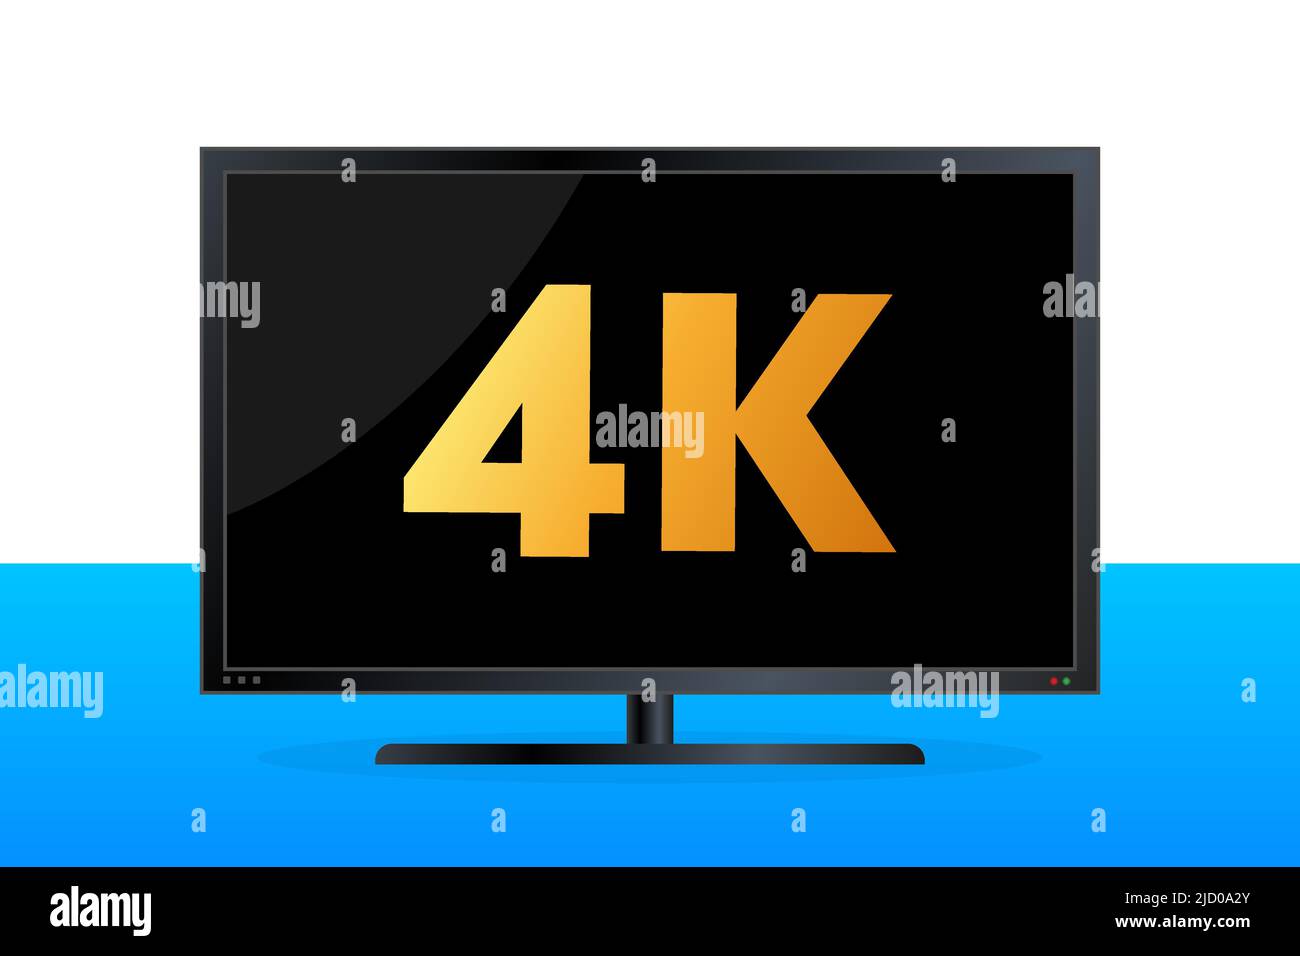 4k ultrahd , 2k quadhd , 1080 fullhd and 720 hd dimensions of video. Stock Vector